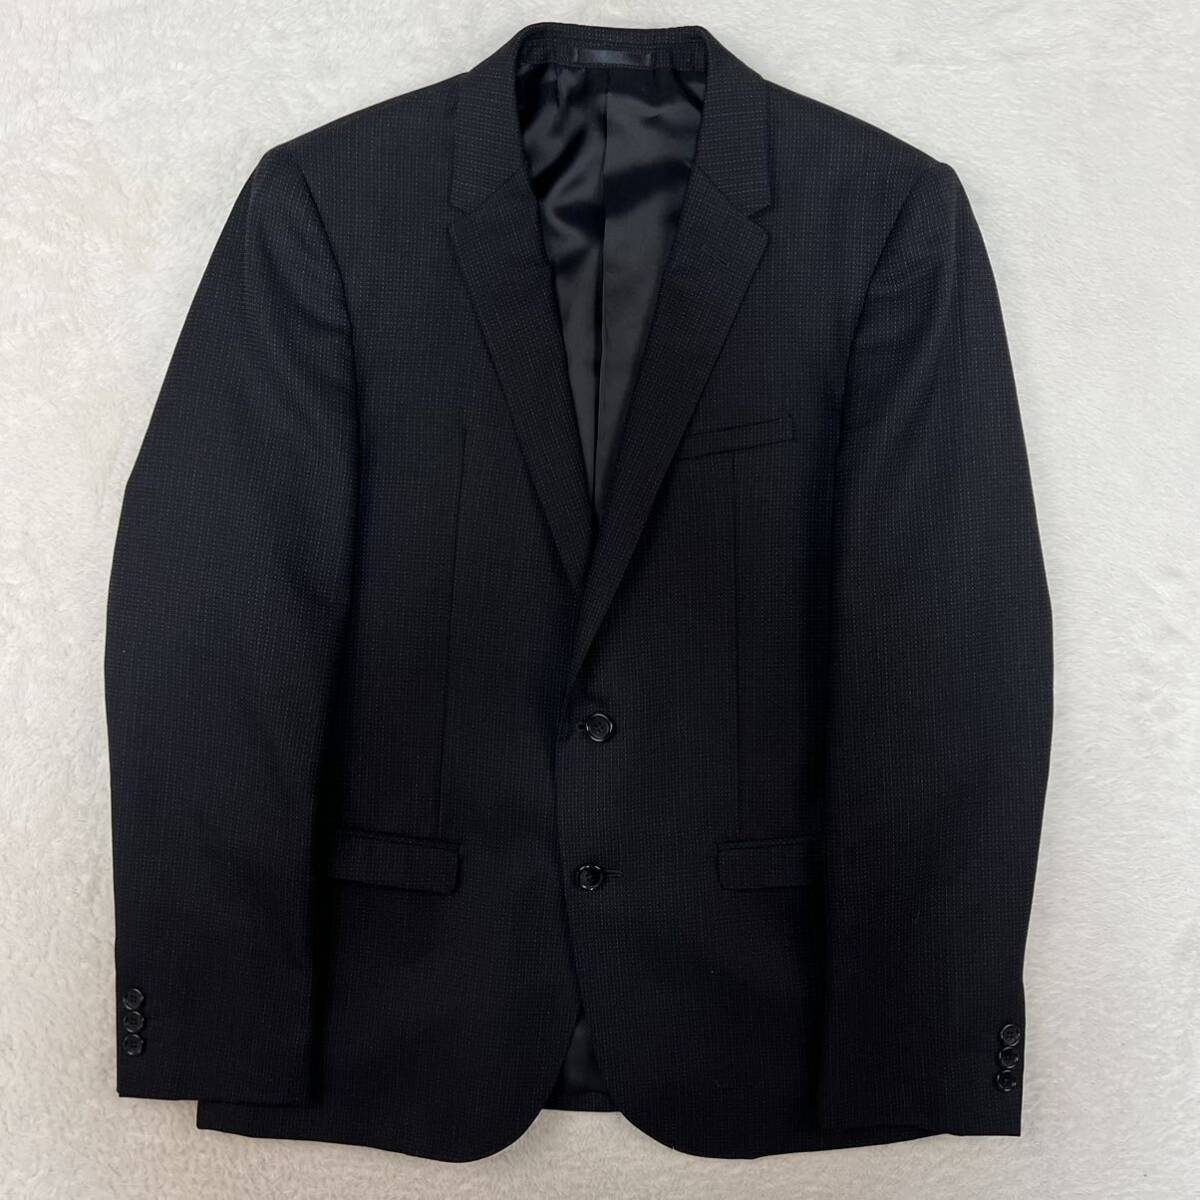 TAKAQ タカキュー 上下セットアップスーツ シングルスーツ 紳士服 ビジネス 入学式 AB6 メンズ 国内正規品_画像2